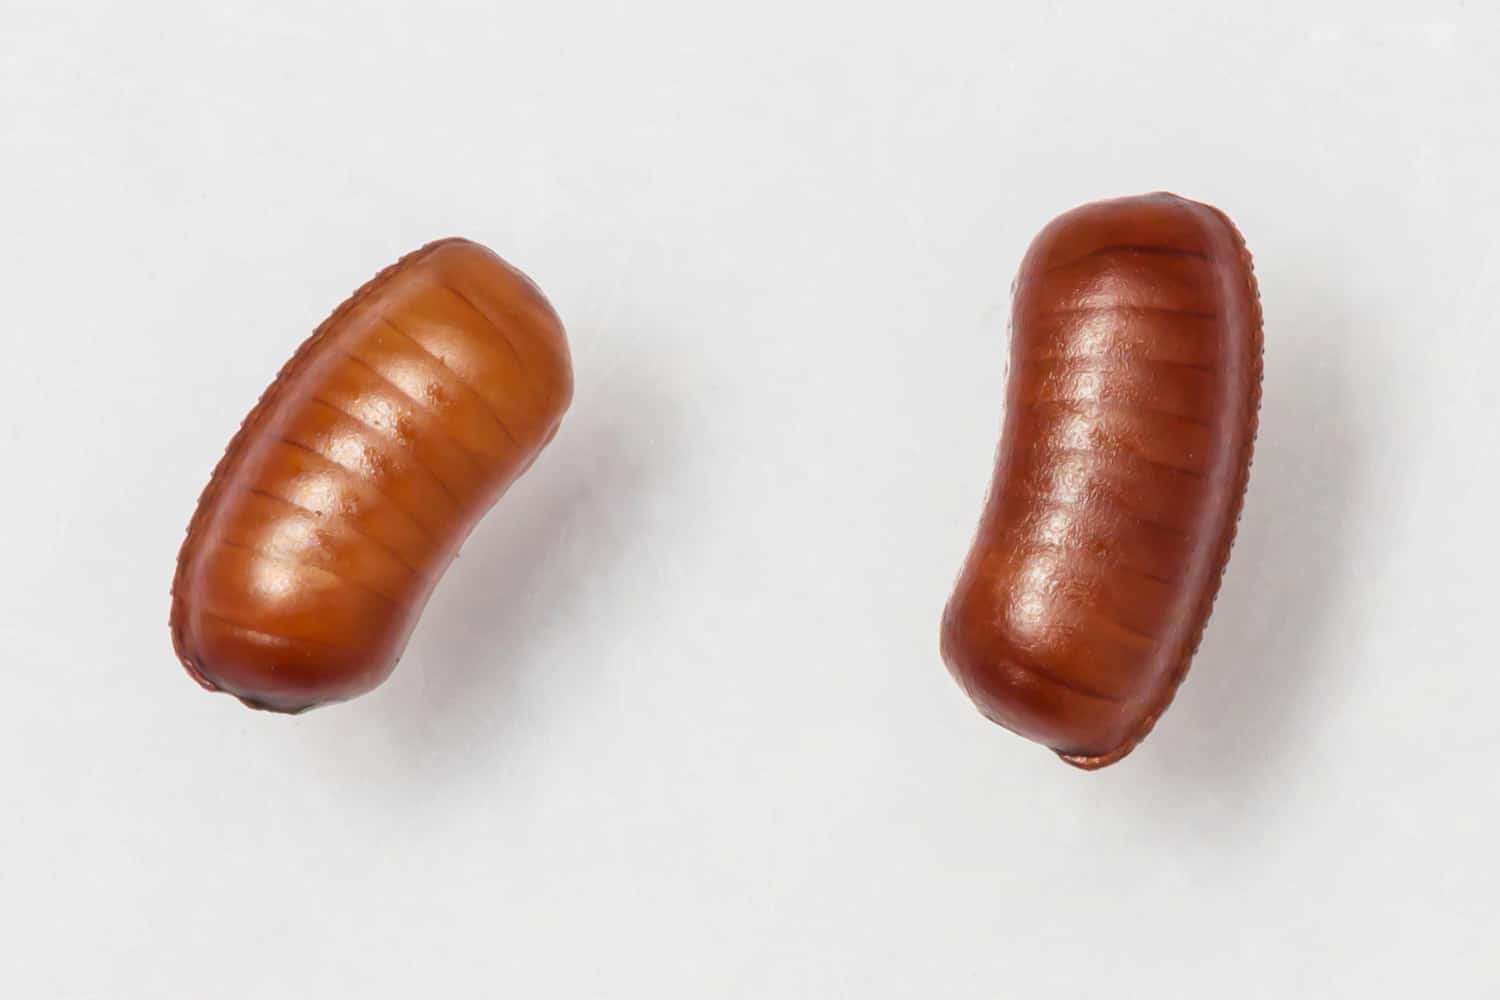 cockroach kecoa telur pallens kecoak scarafaggio membasmi kepala keras mengenali sacchi mudah membandel colourbox